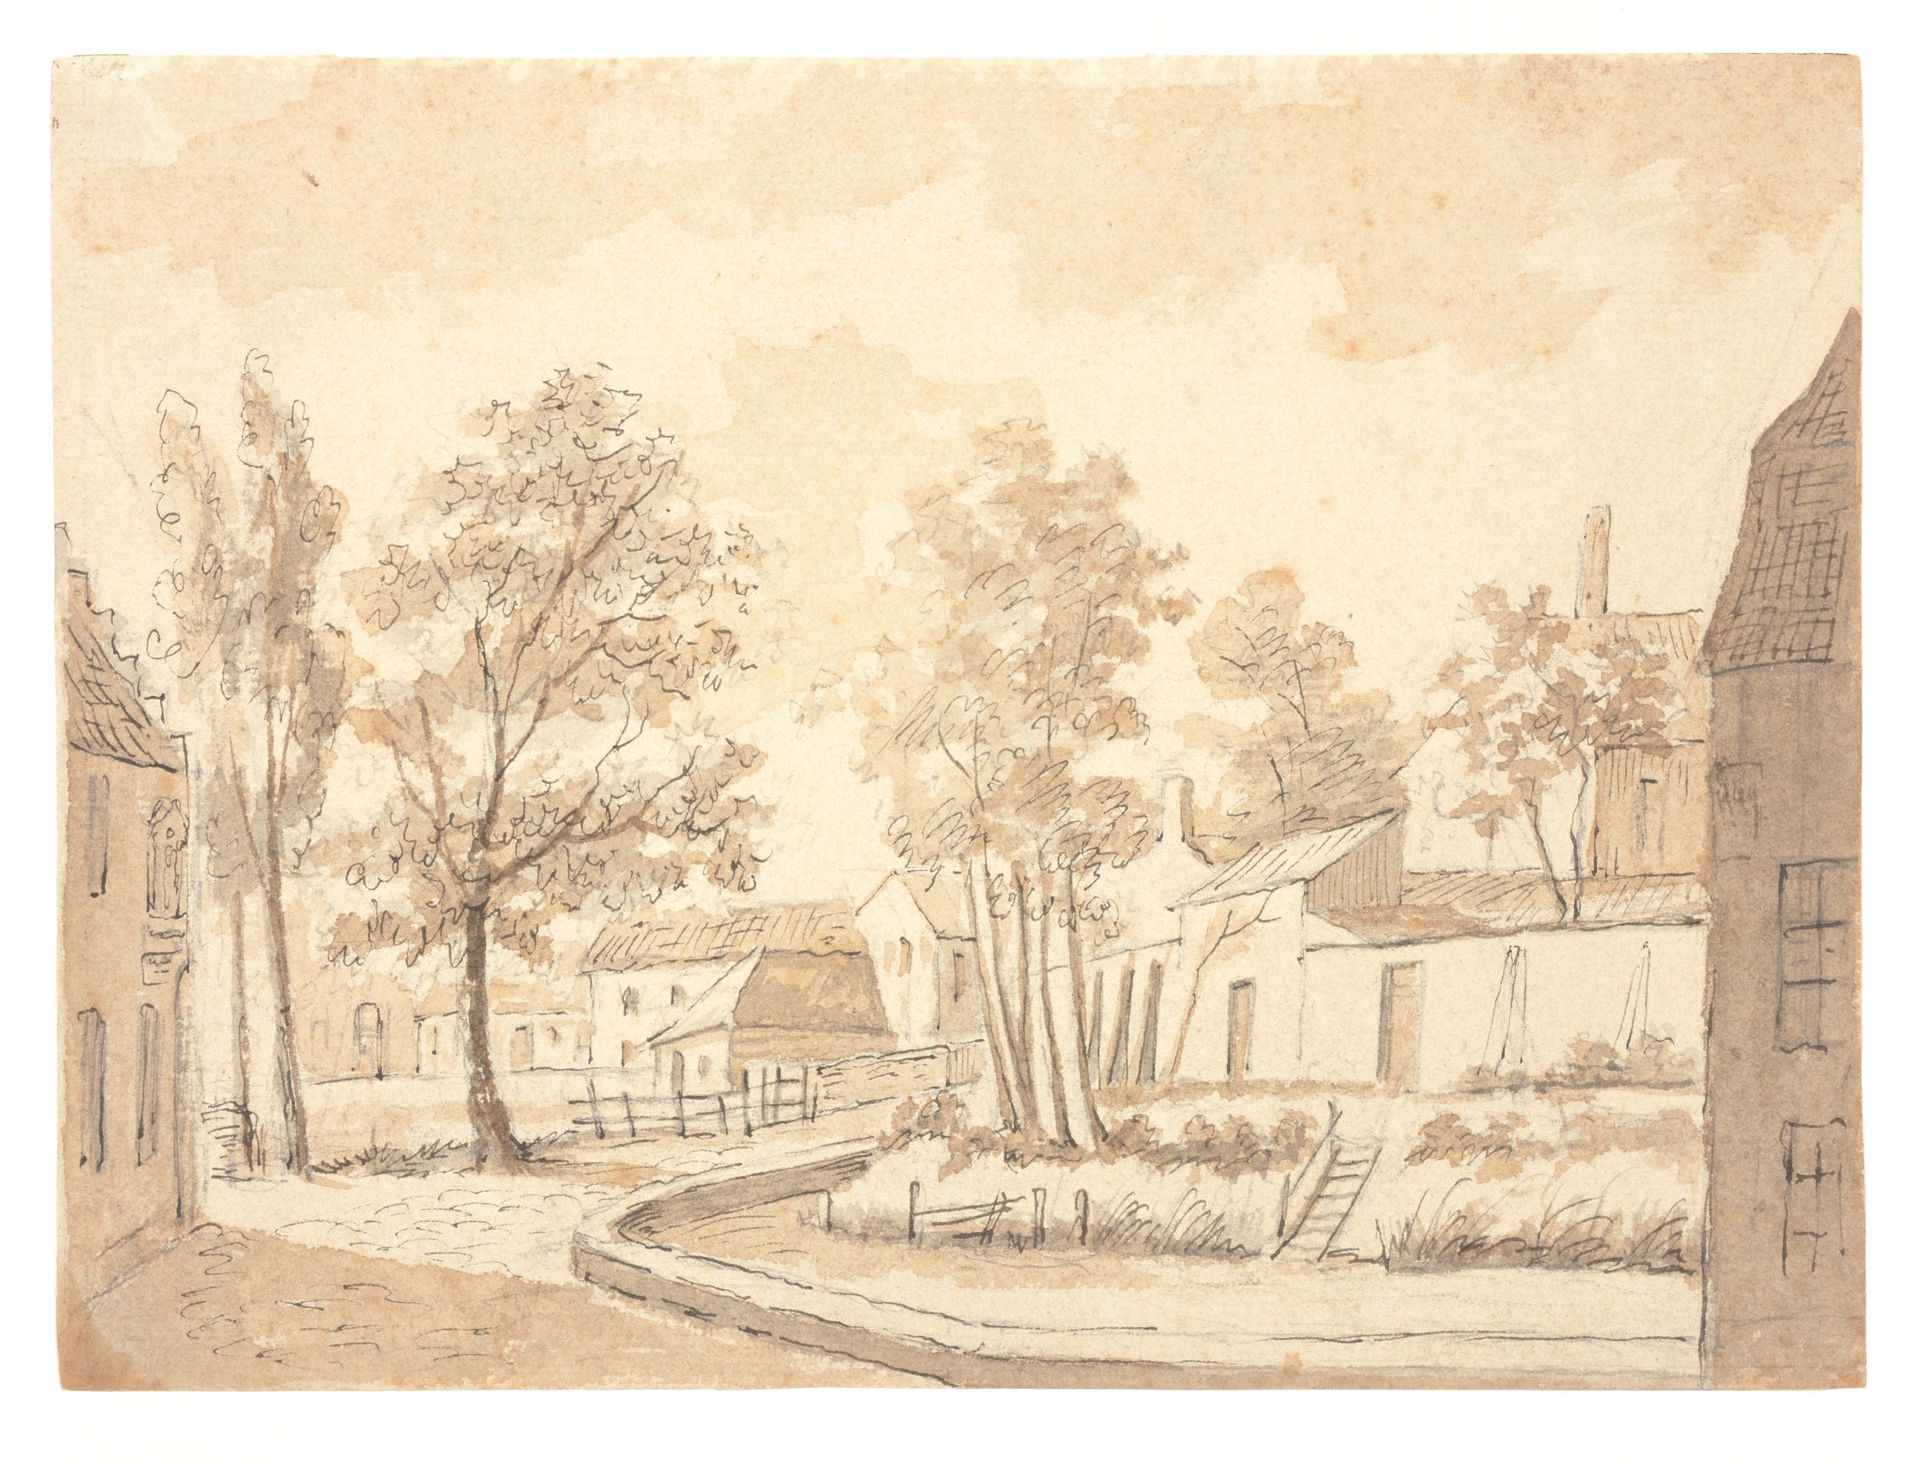 [Gent] 尼乌兰-特-根特（1806年

水彩画 (19 x 26 cm), 签名(标题和日期在背面)。路过的人